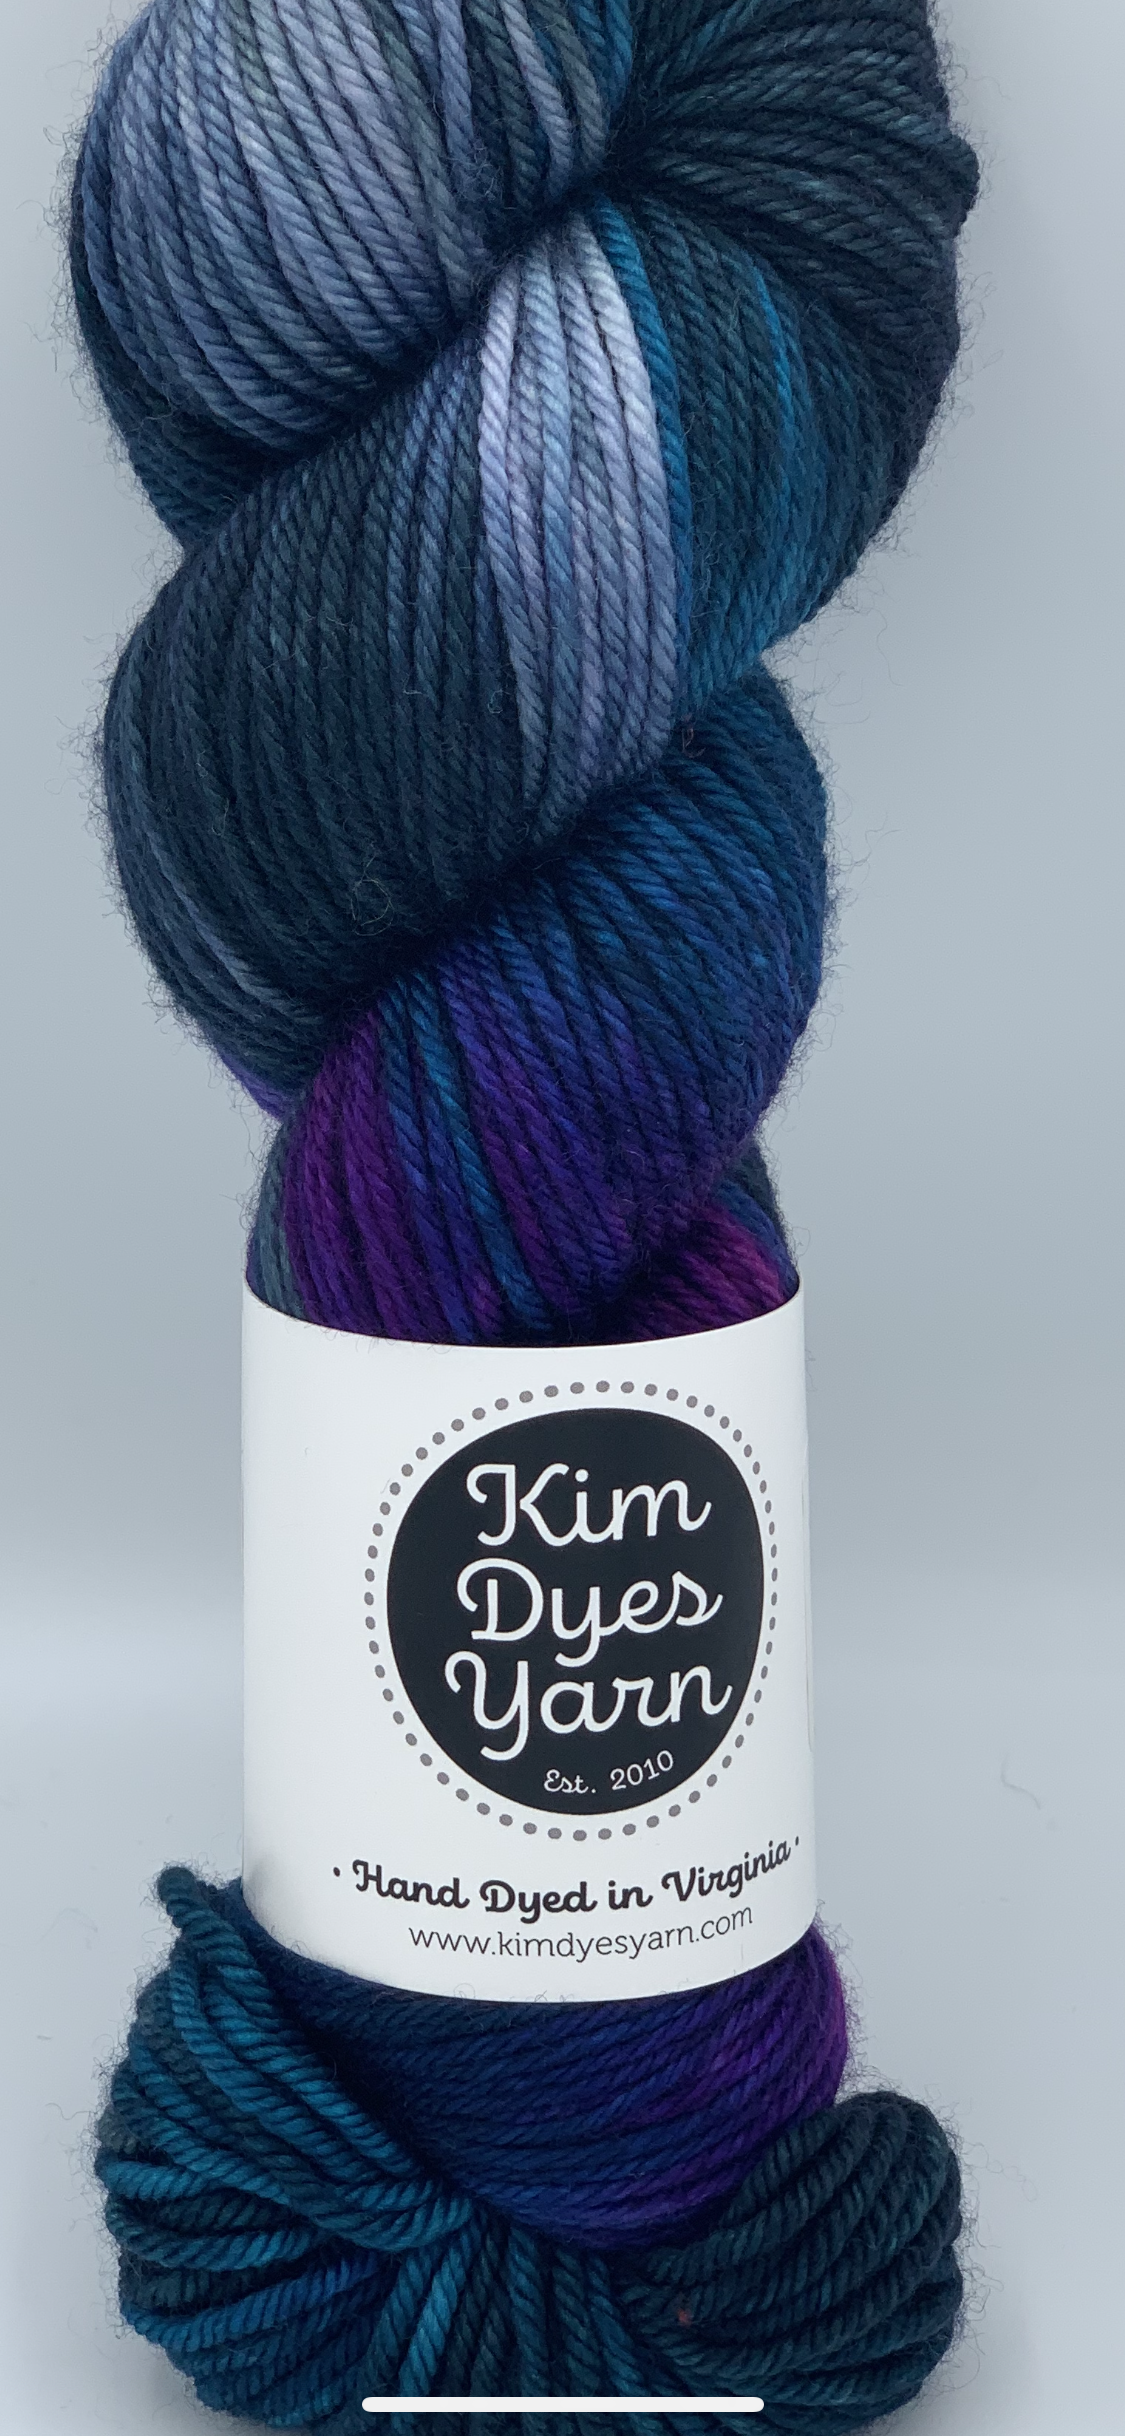 Kim Dyes Yarn Cannoli Worsted